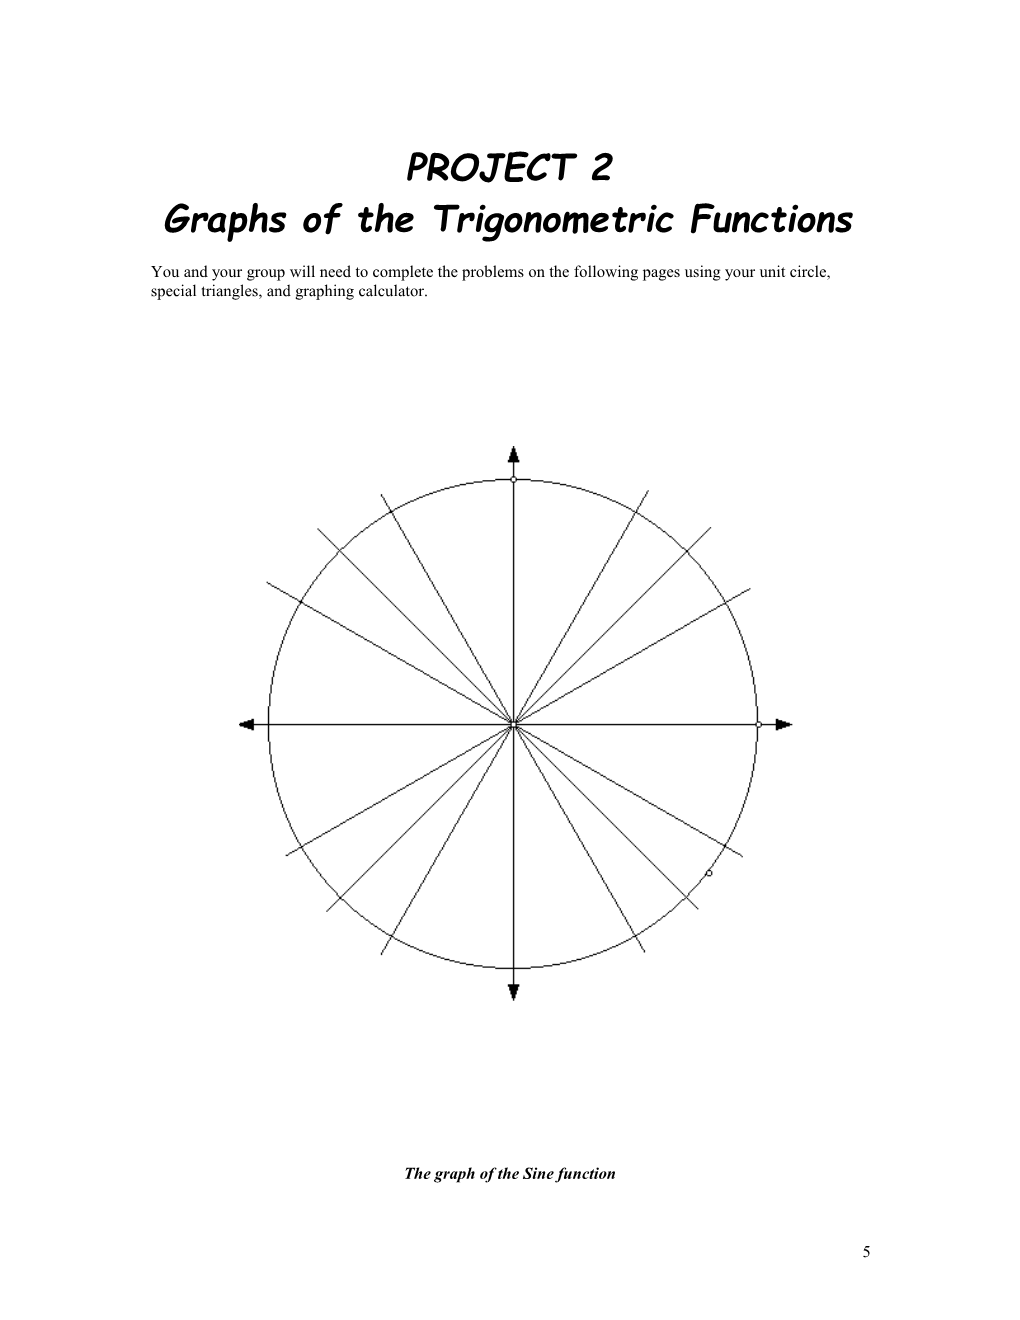 Graphs of the Trigonometric Functions